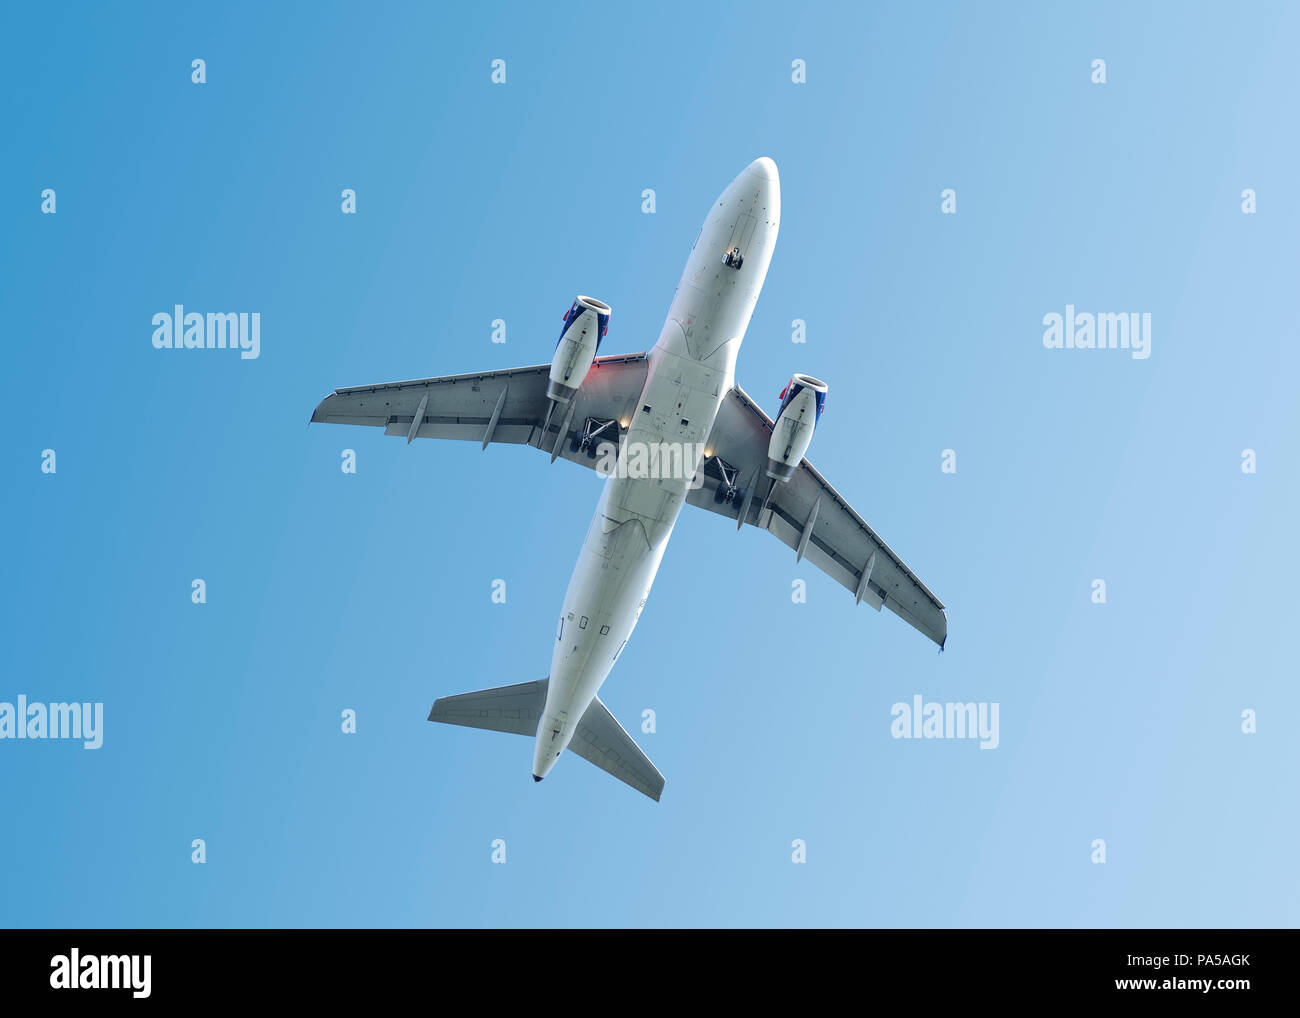 Airplane, Low Angle, UK Stock Photo